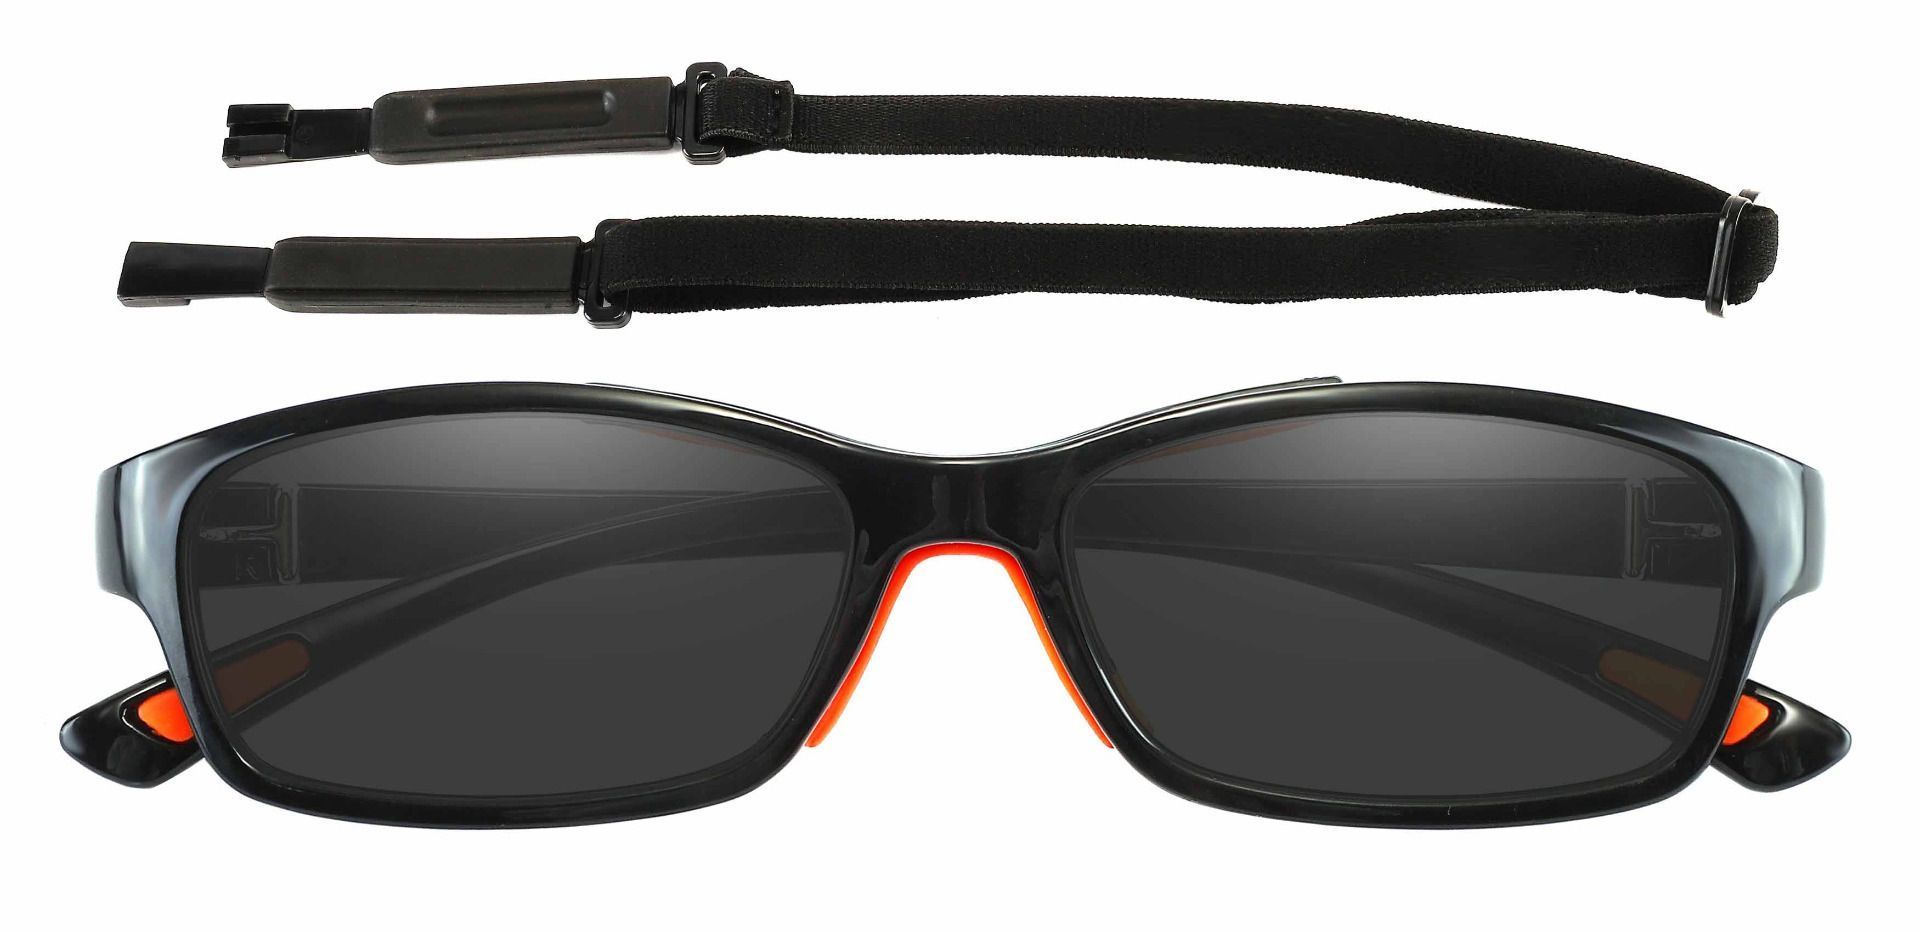 Glynn Rectangle Non-Rx Sunglasses - Black Frame With Gray Lenses